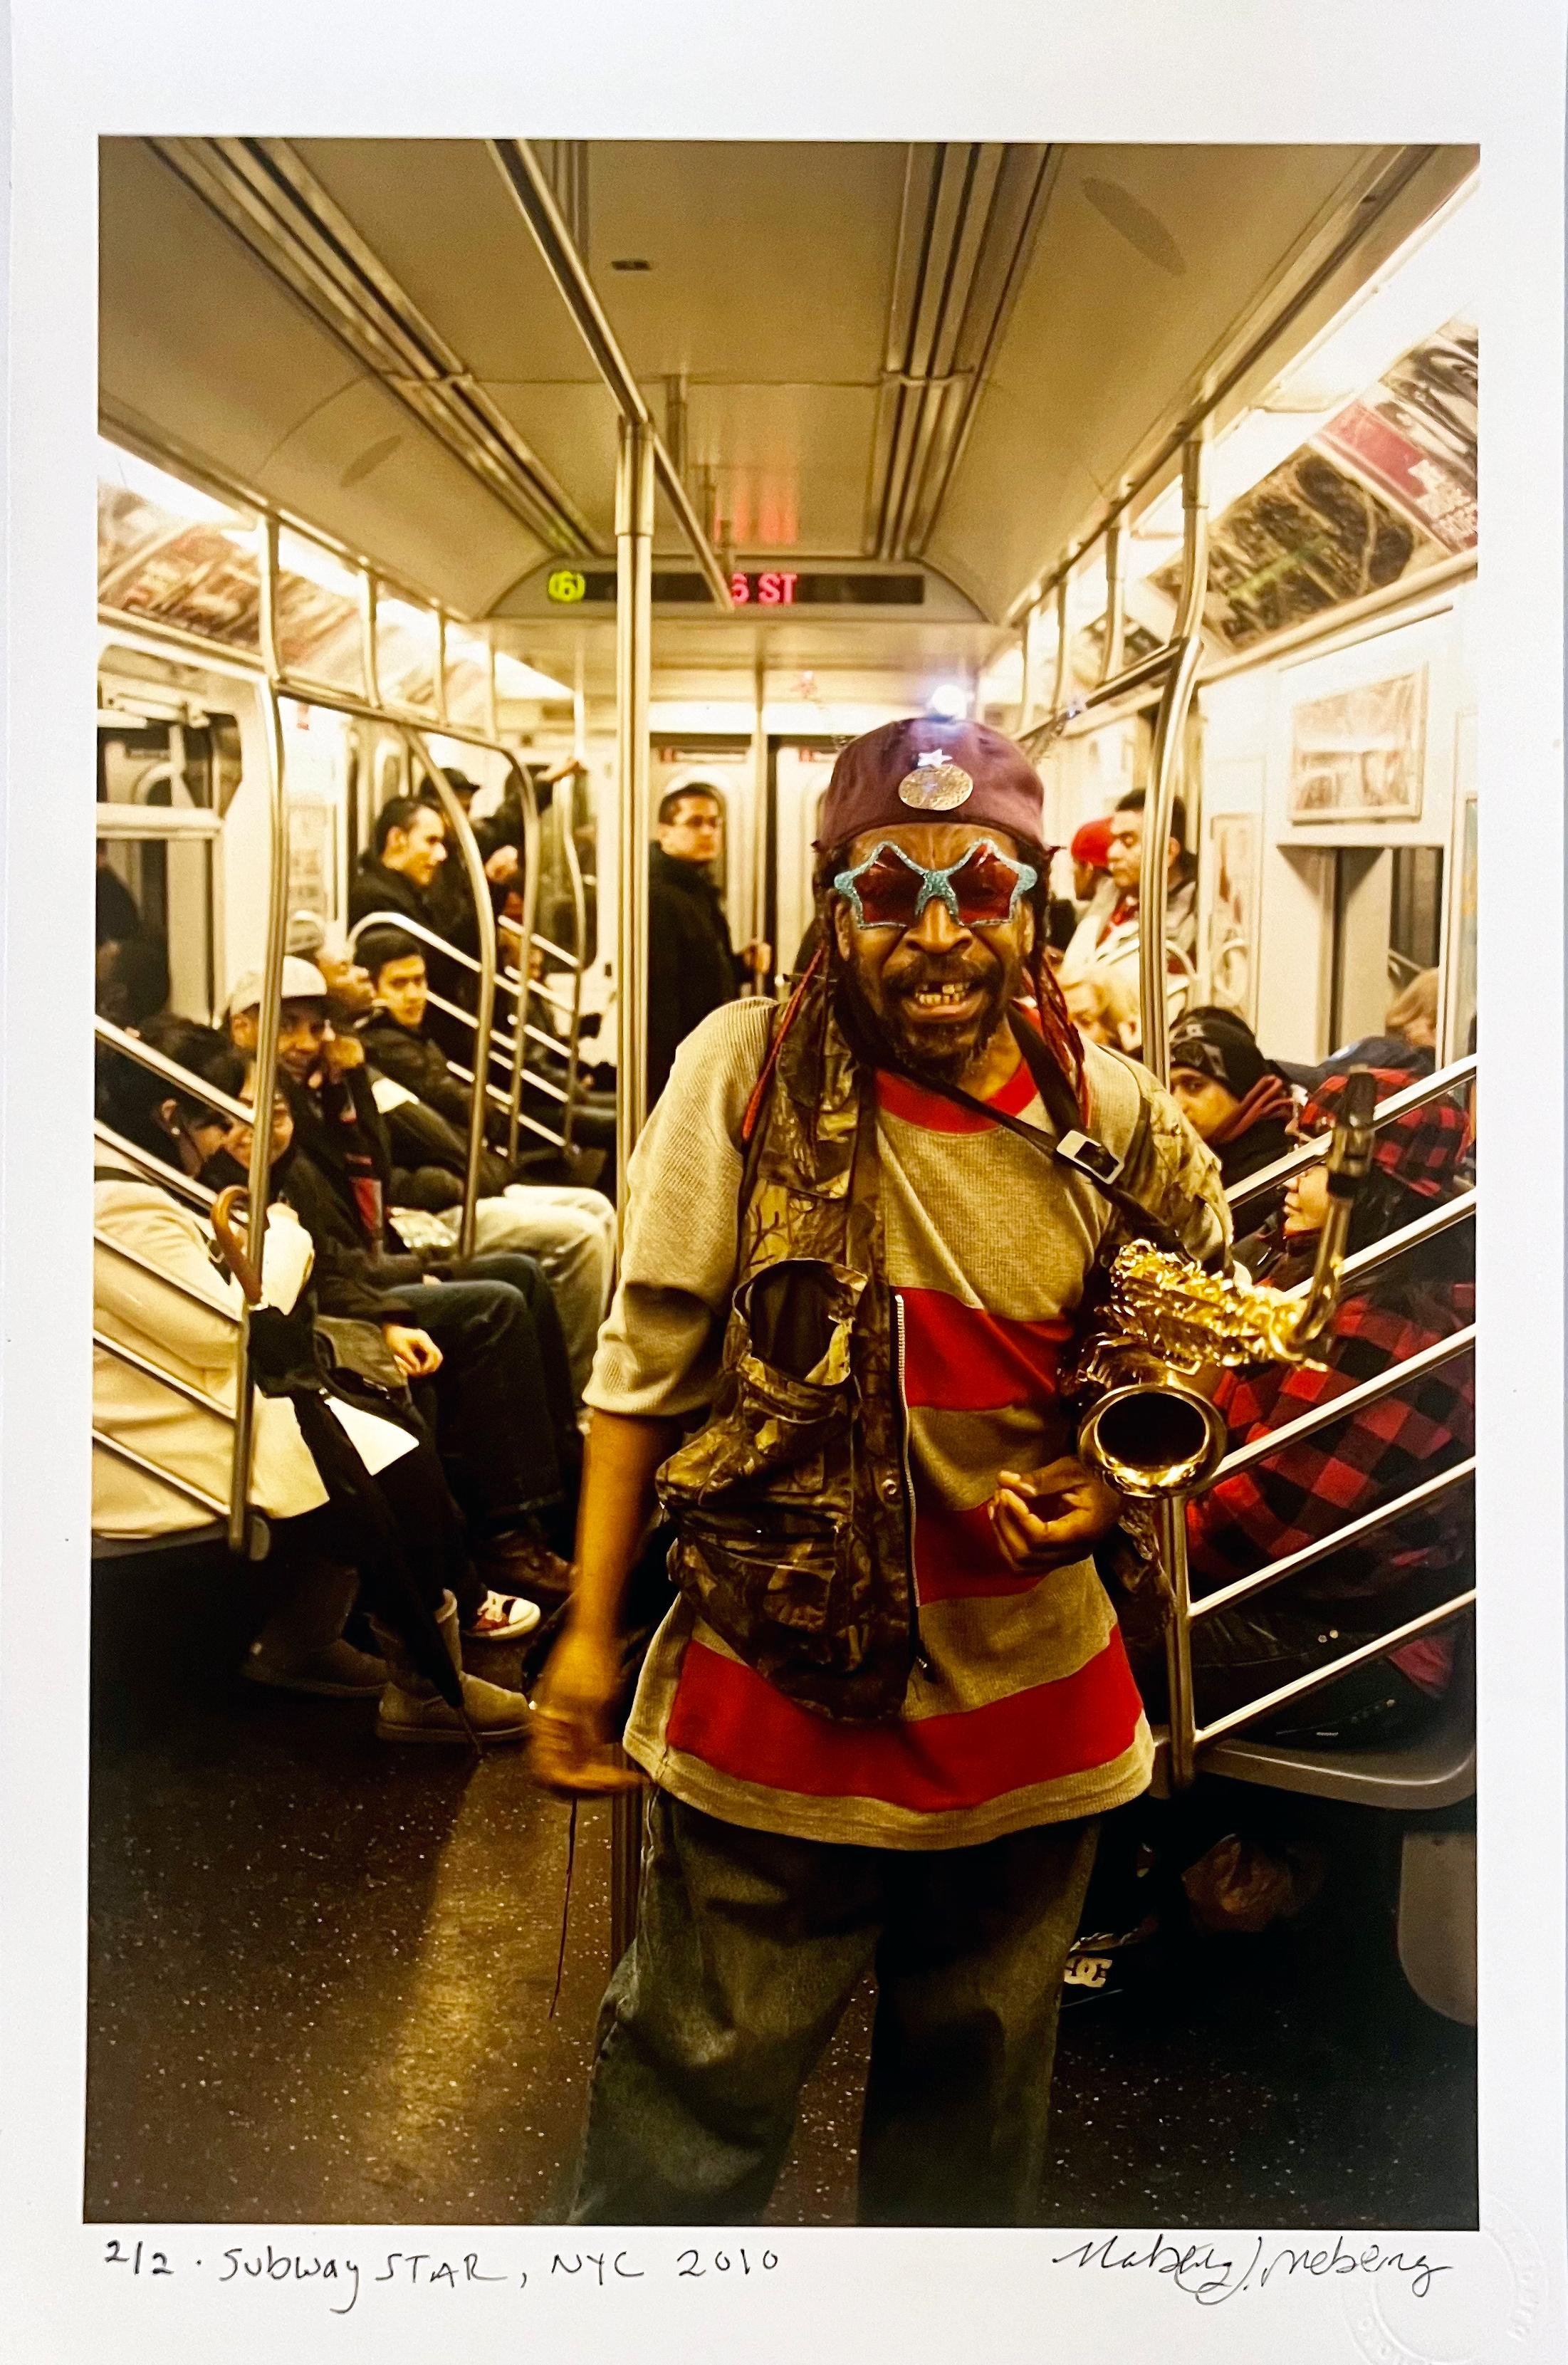 Roberta Fineberg Portrait Photograph – Subway Star, Street Photography New York City, Fotografie in limitierter Auflage